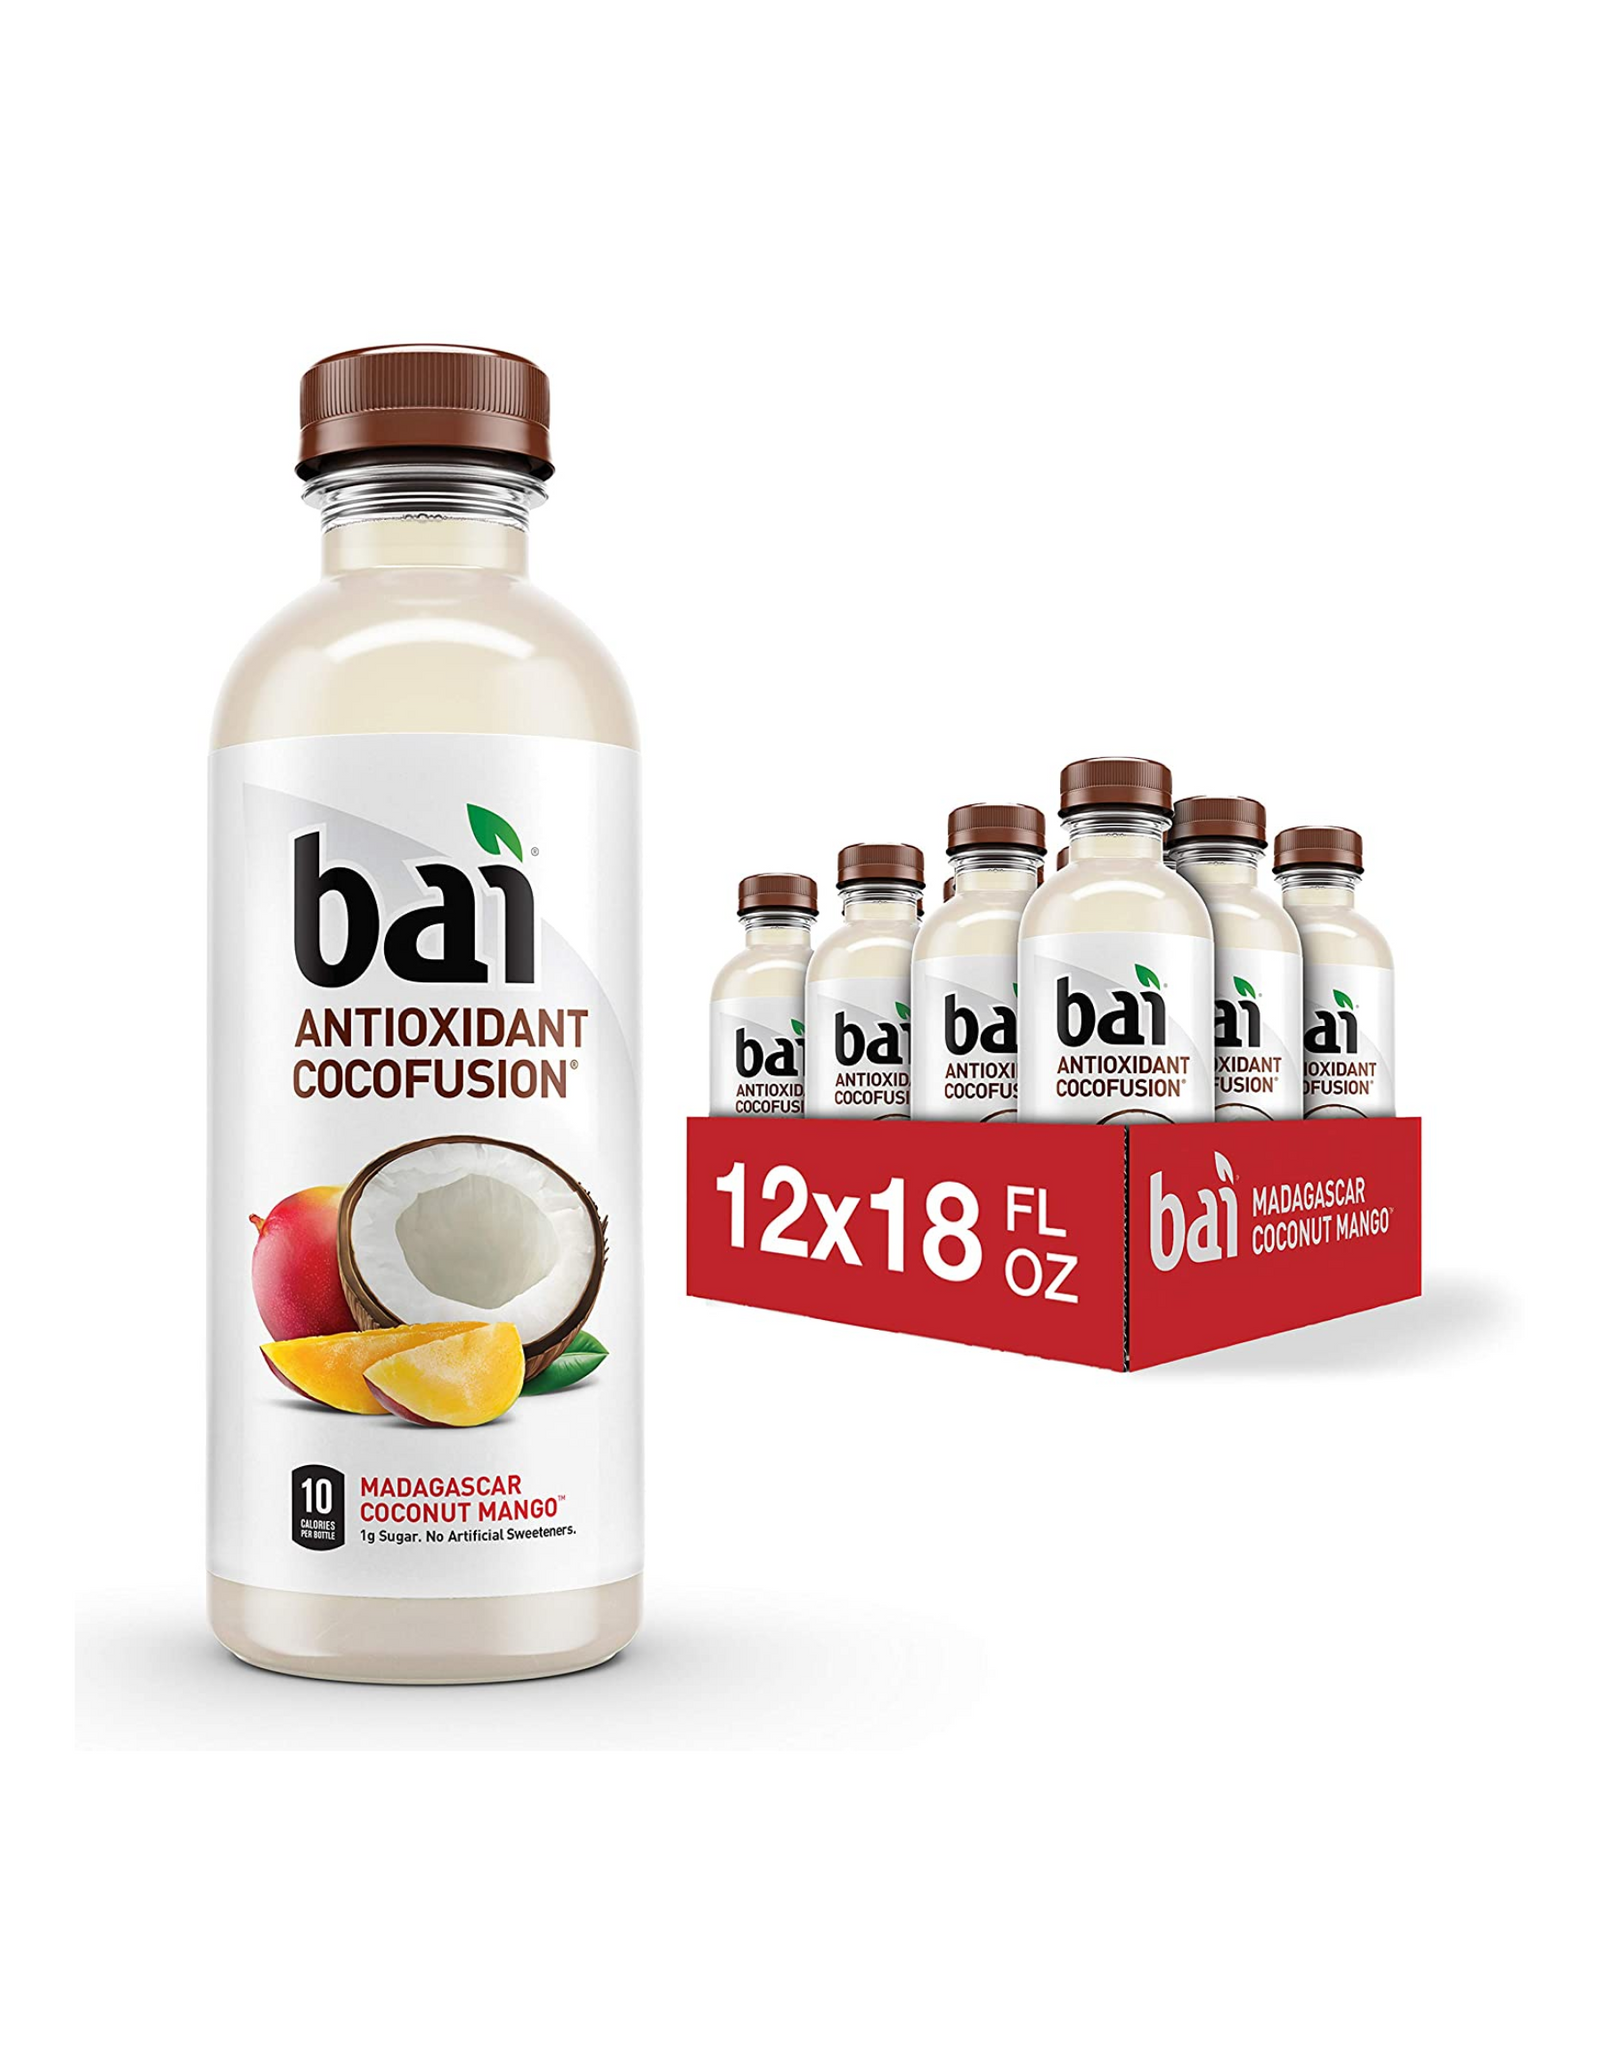 Bai Coconut Flavored Water, Antioxidant Cocofusion, Madagascar Coconut Mango, 18 fl oz (Pack of 12)